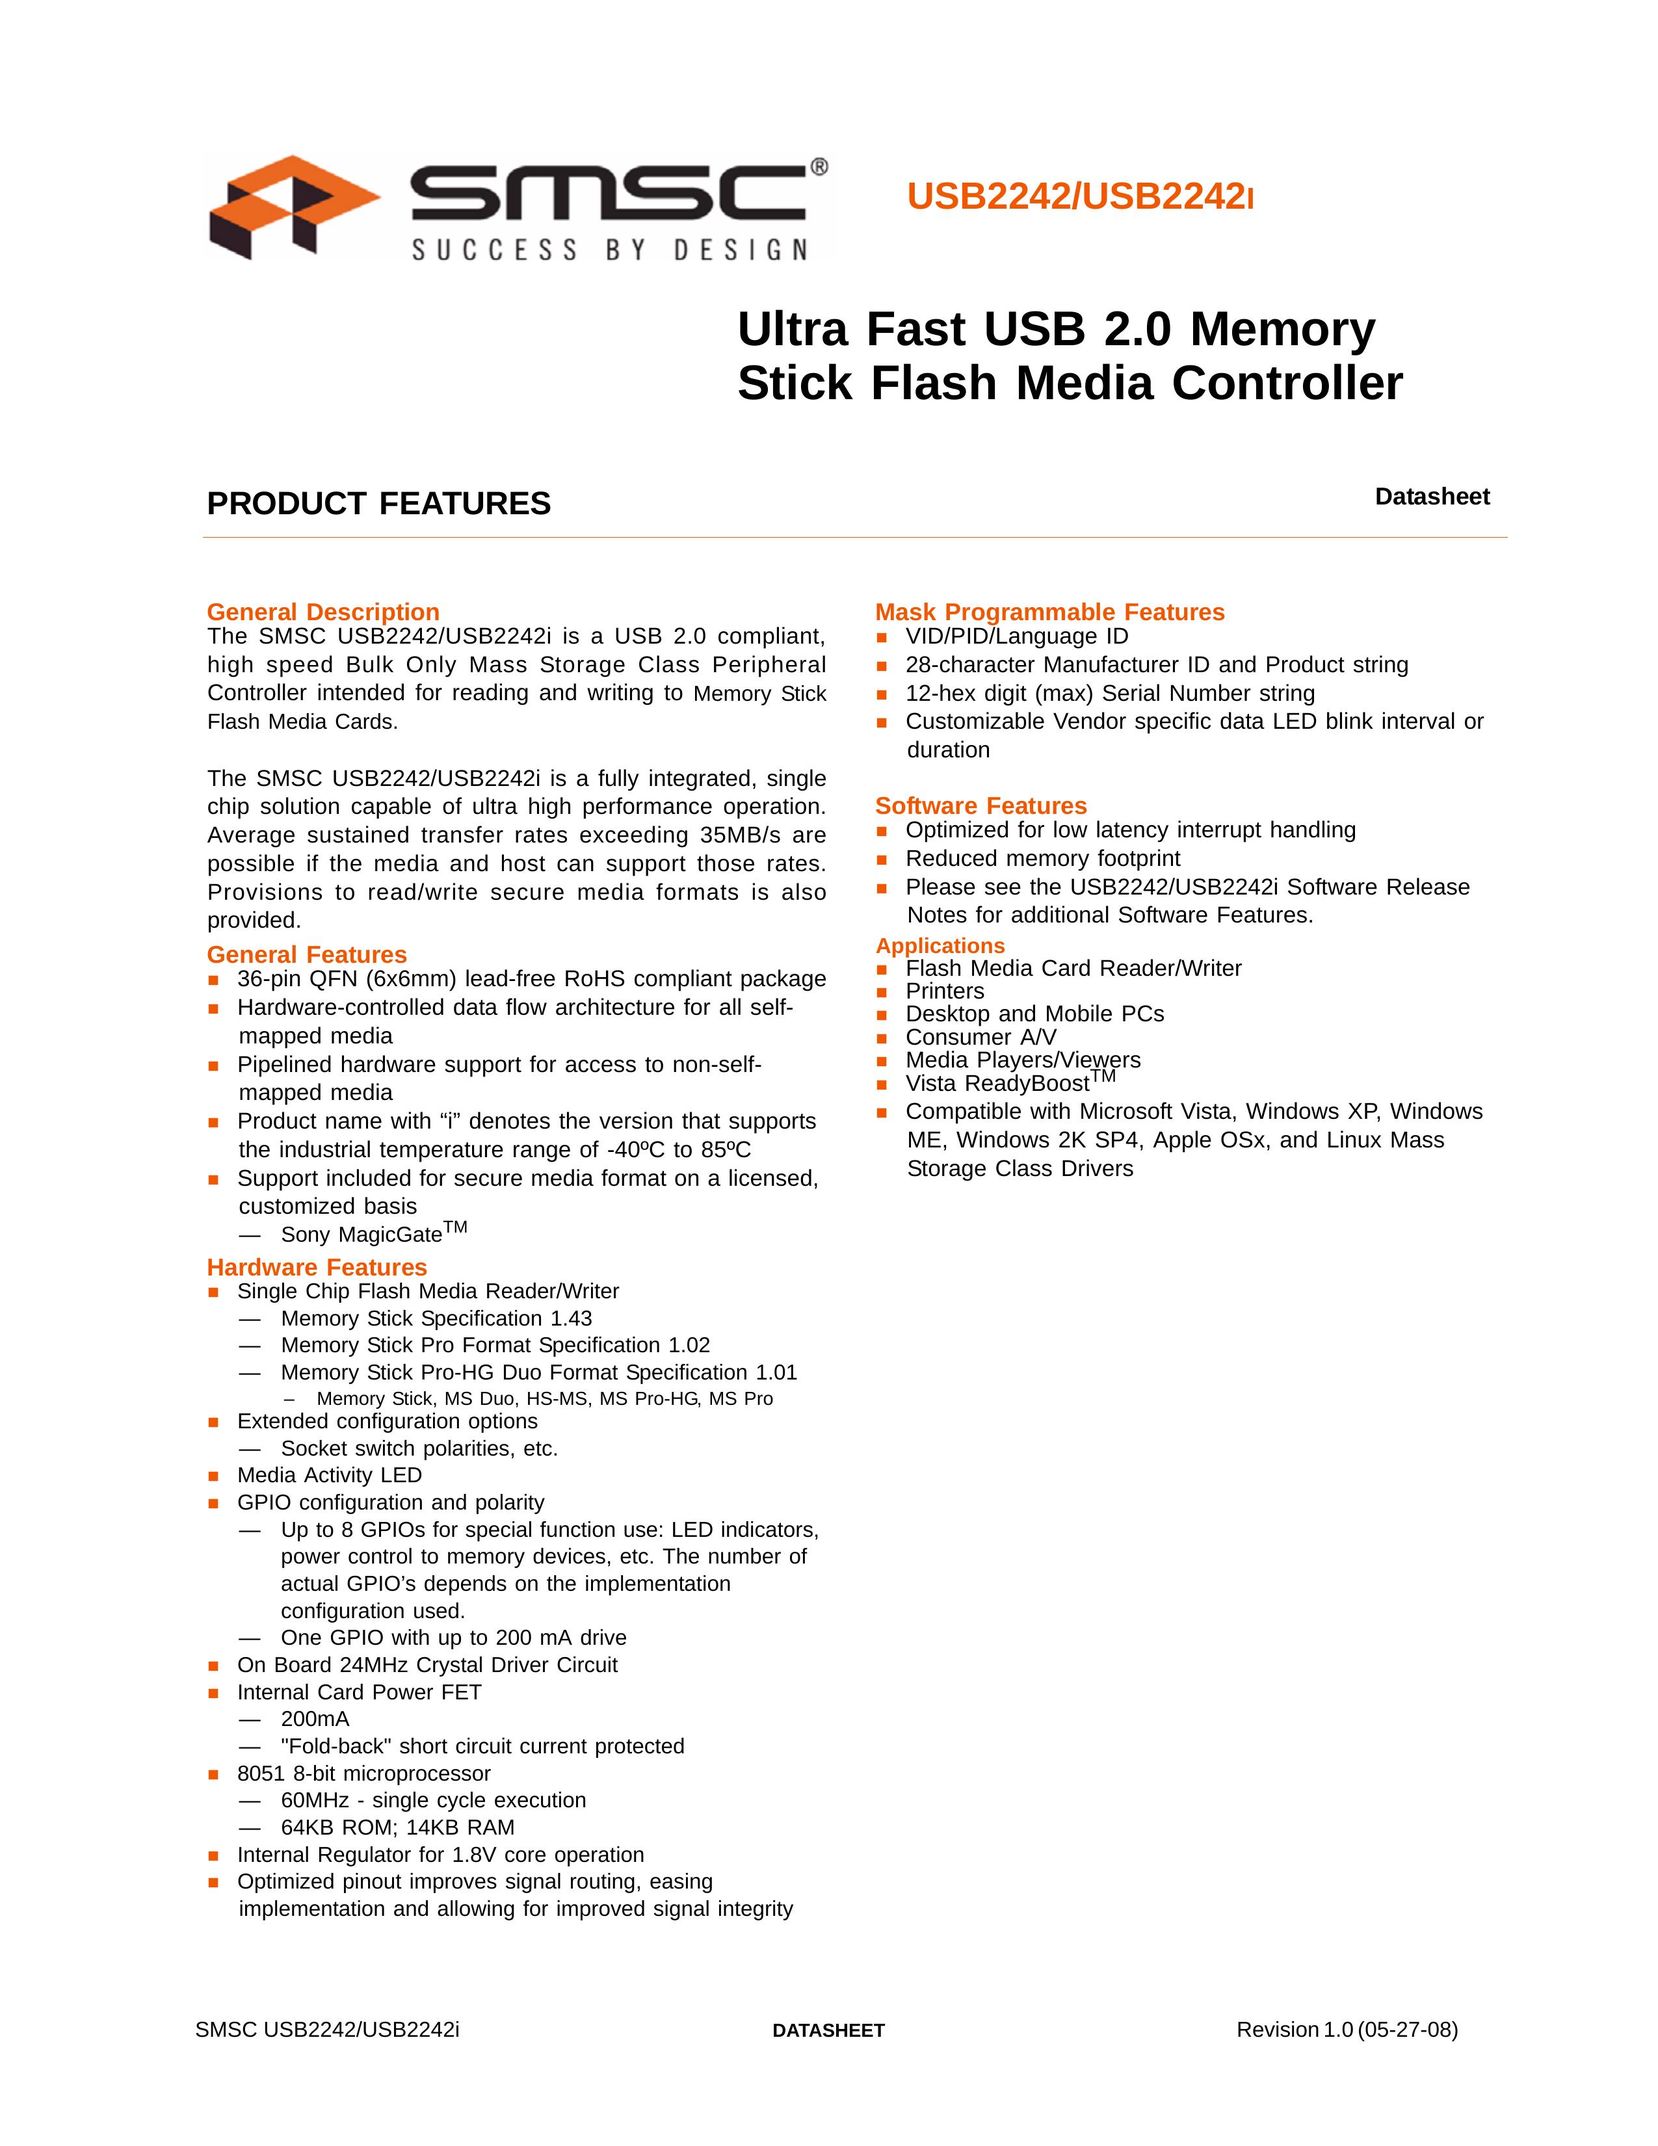 SMSC USB2242i Computer Drive User Manual